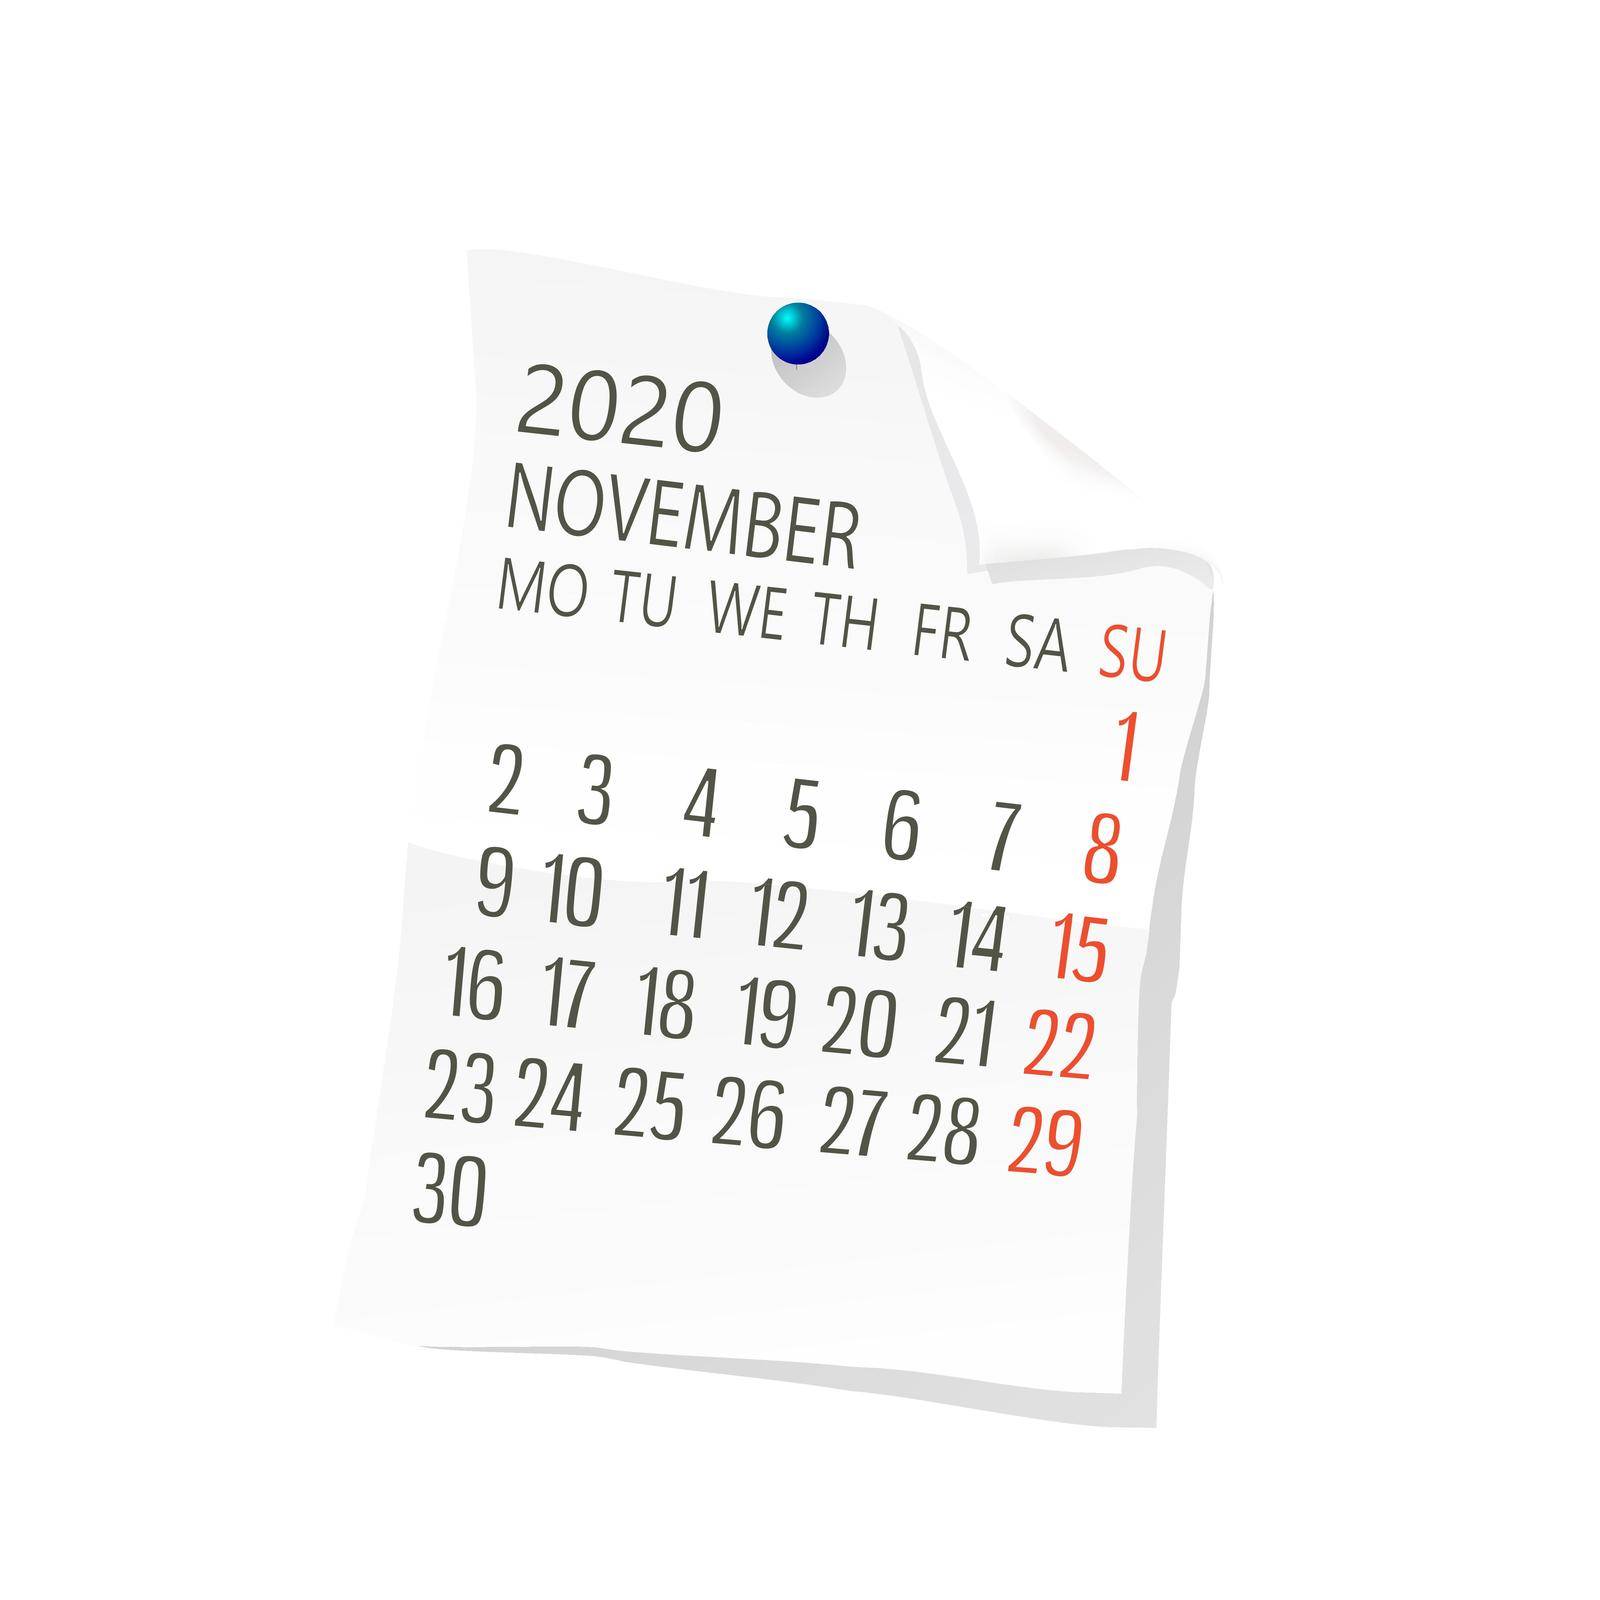 2020 November calendar by Lirch